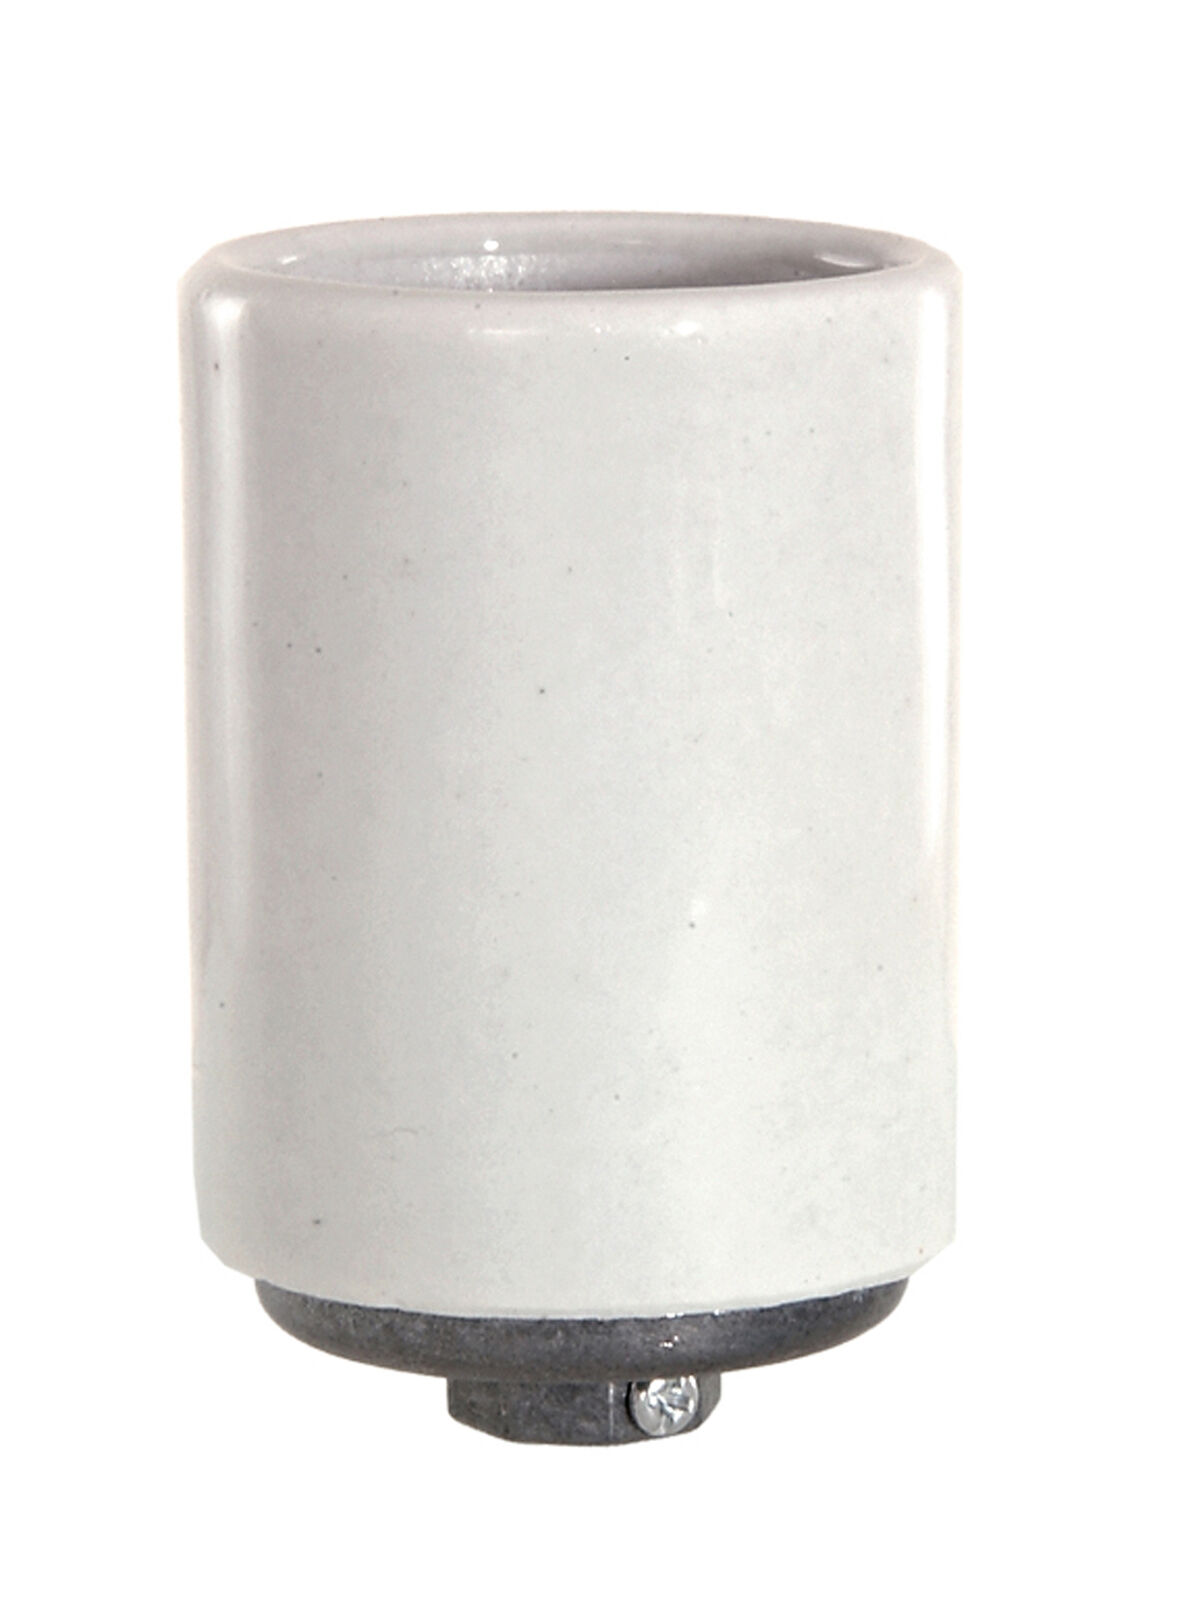 B&P Lamp® Mogul Size Keyless Porcelain Socket